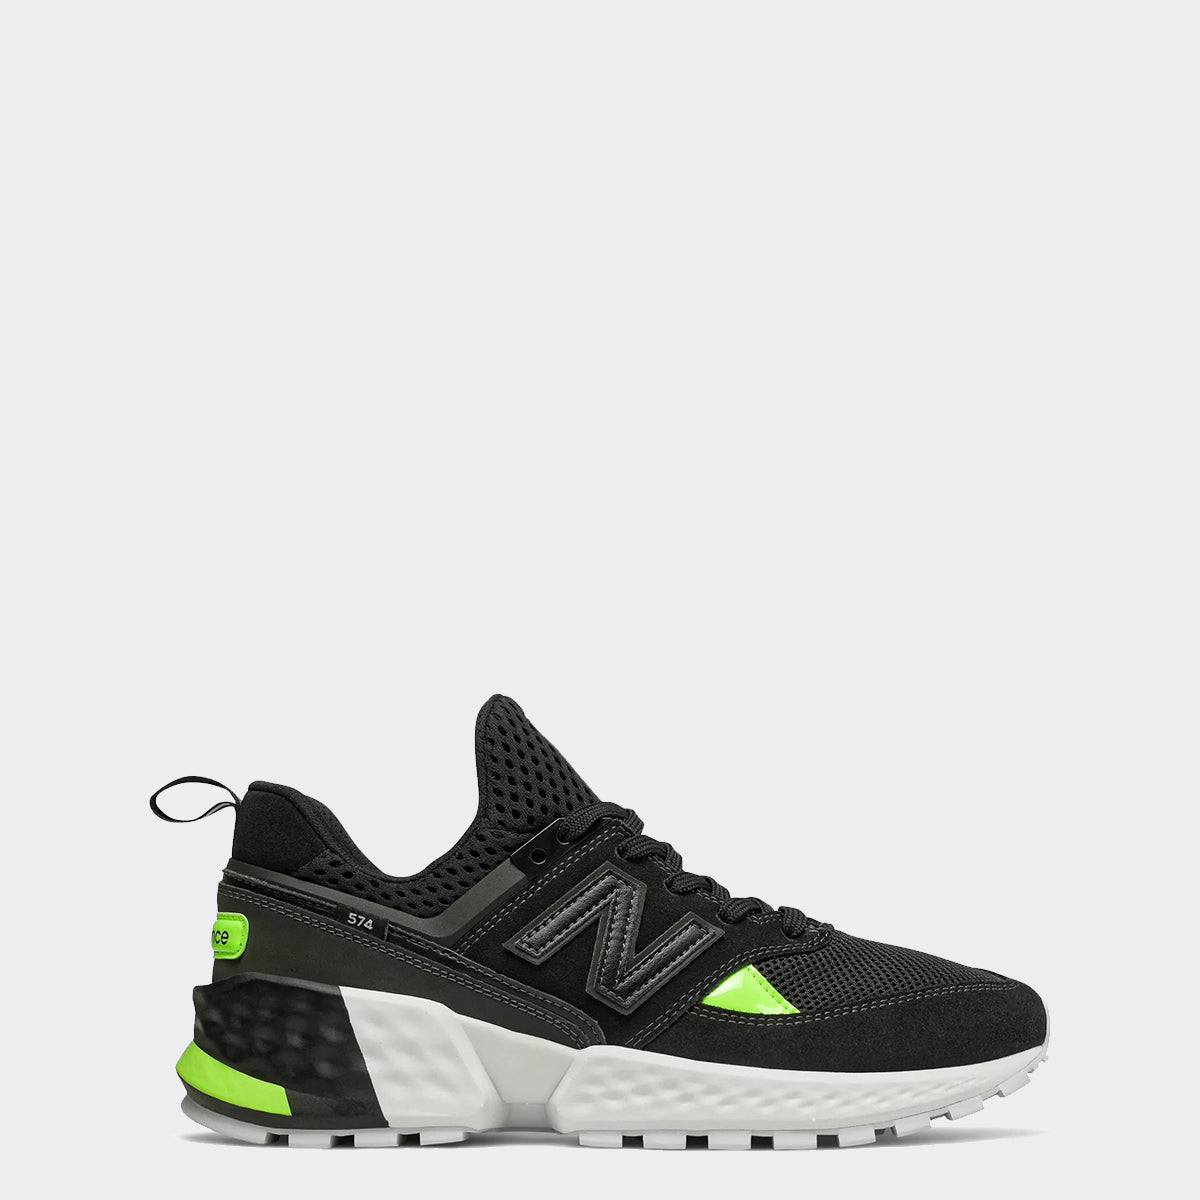 New Balance 574 Sport Shoes Black Lime 